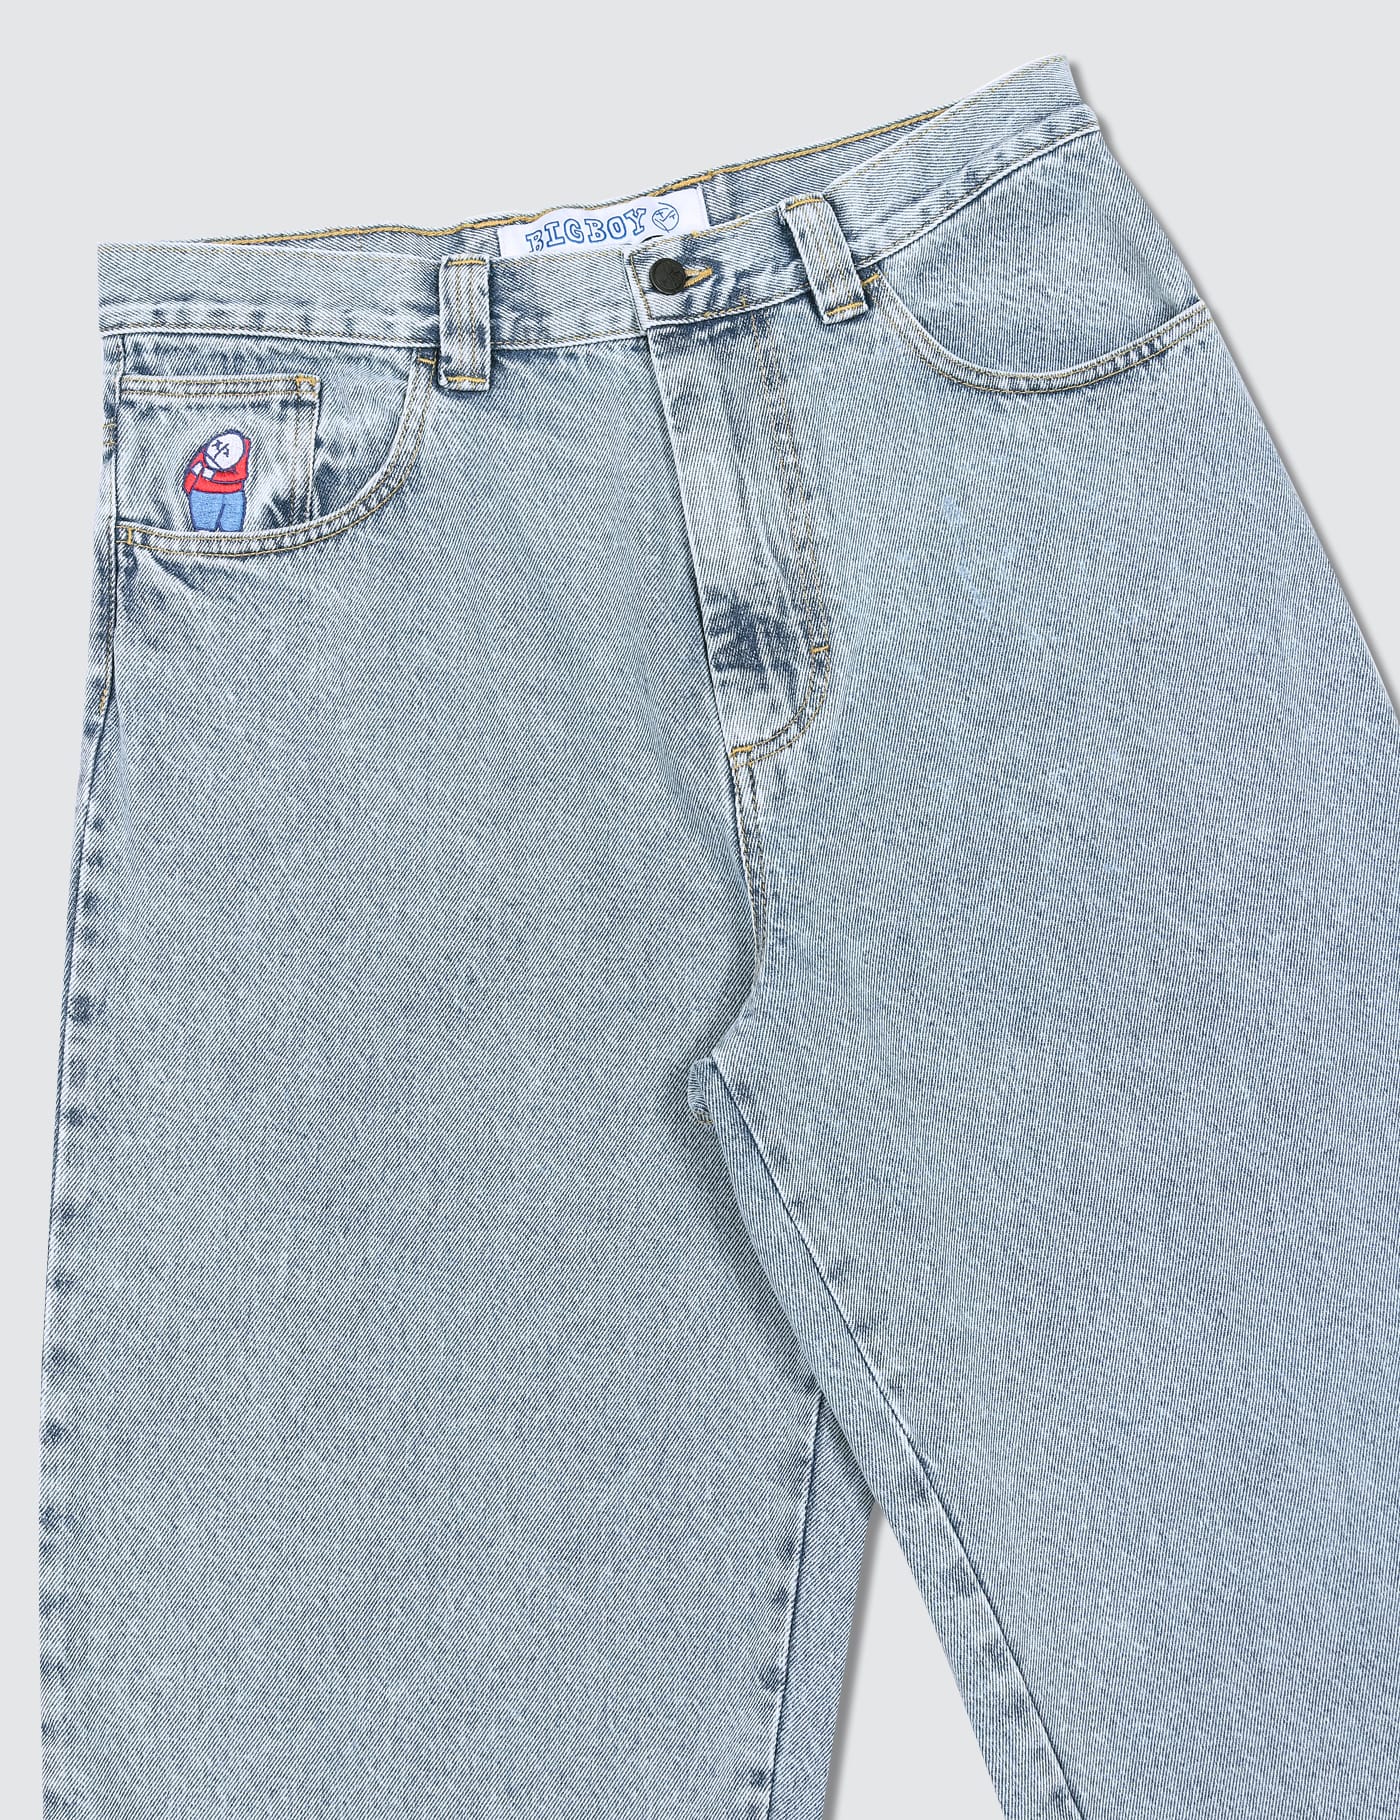 Polar Skate Co. - Big Boy Jeans | HBX - Globally Curated Fashion 